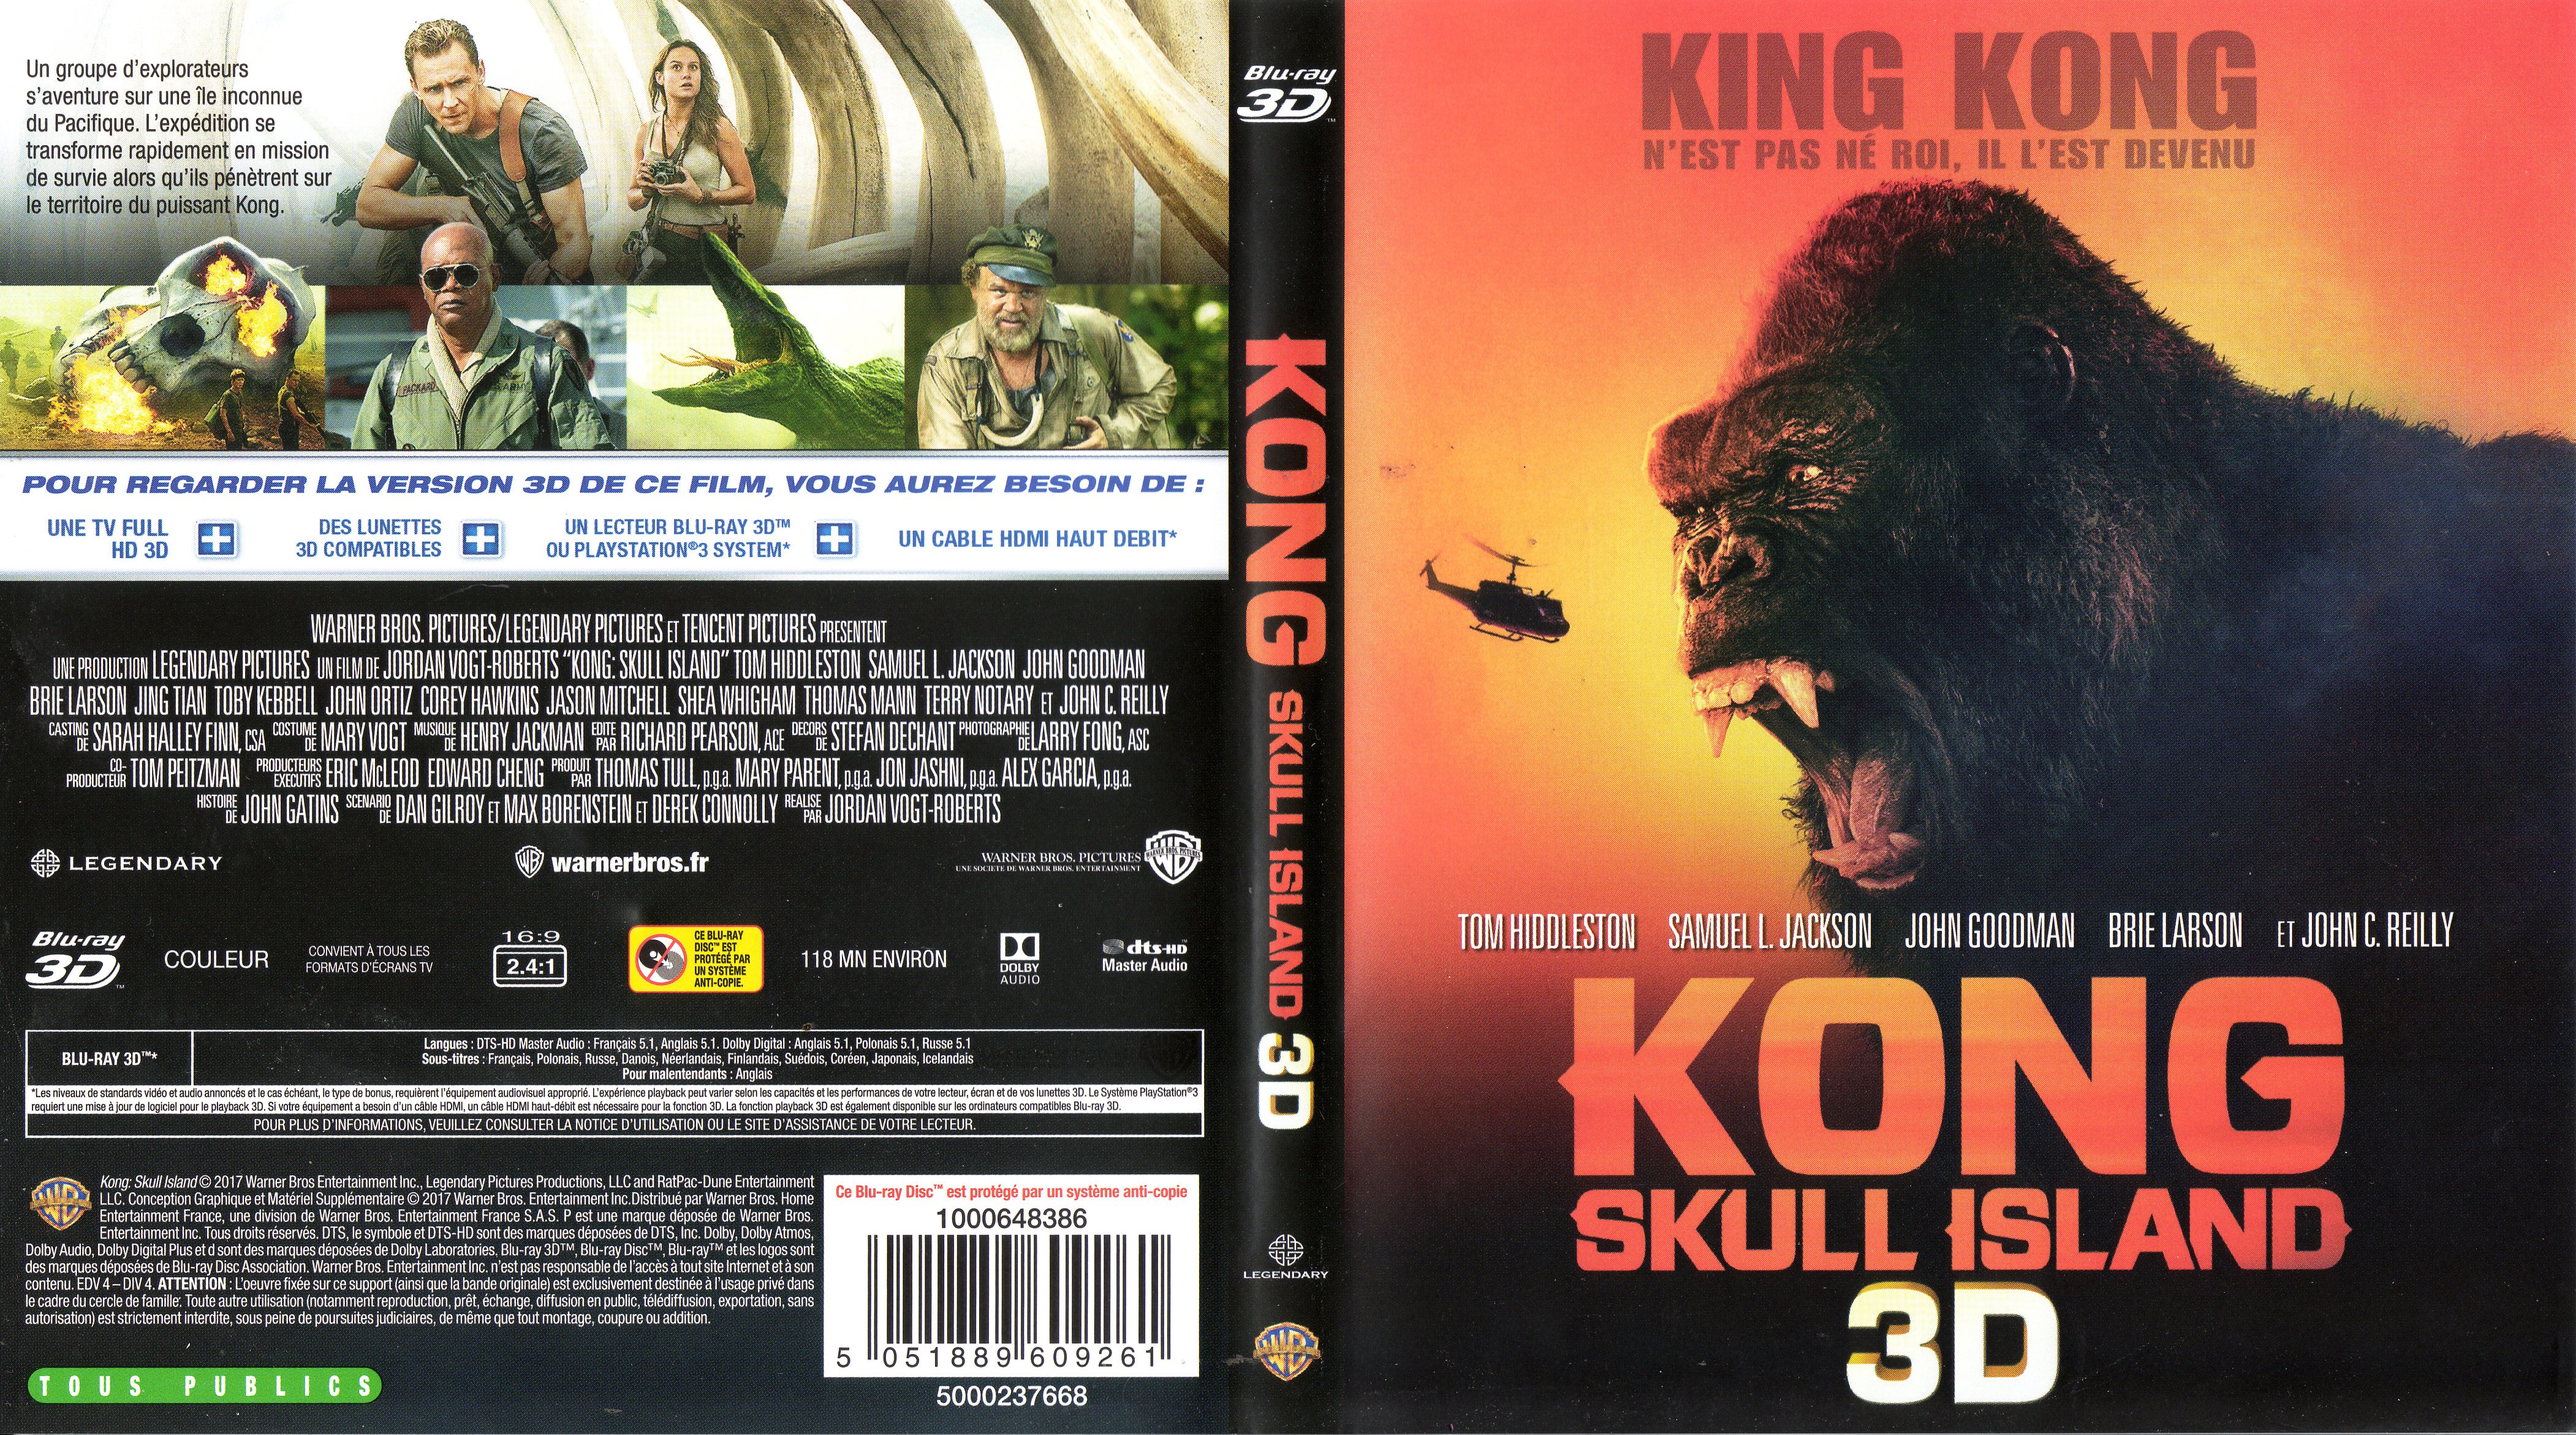 Jaquette DVD Kong: Skull Island 3D (BLU-RAY)